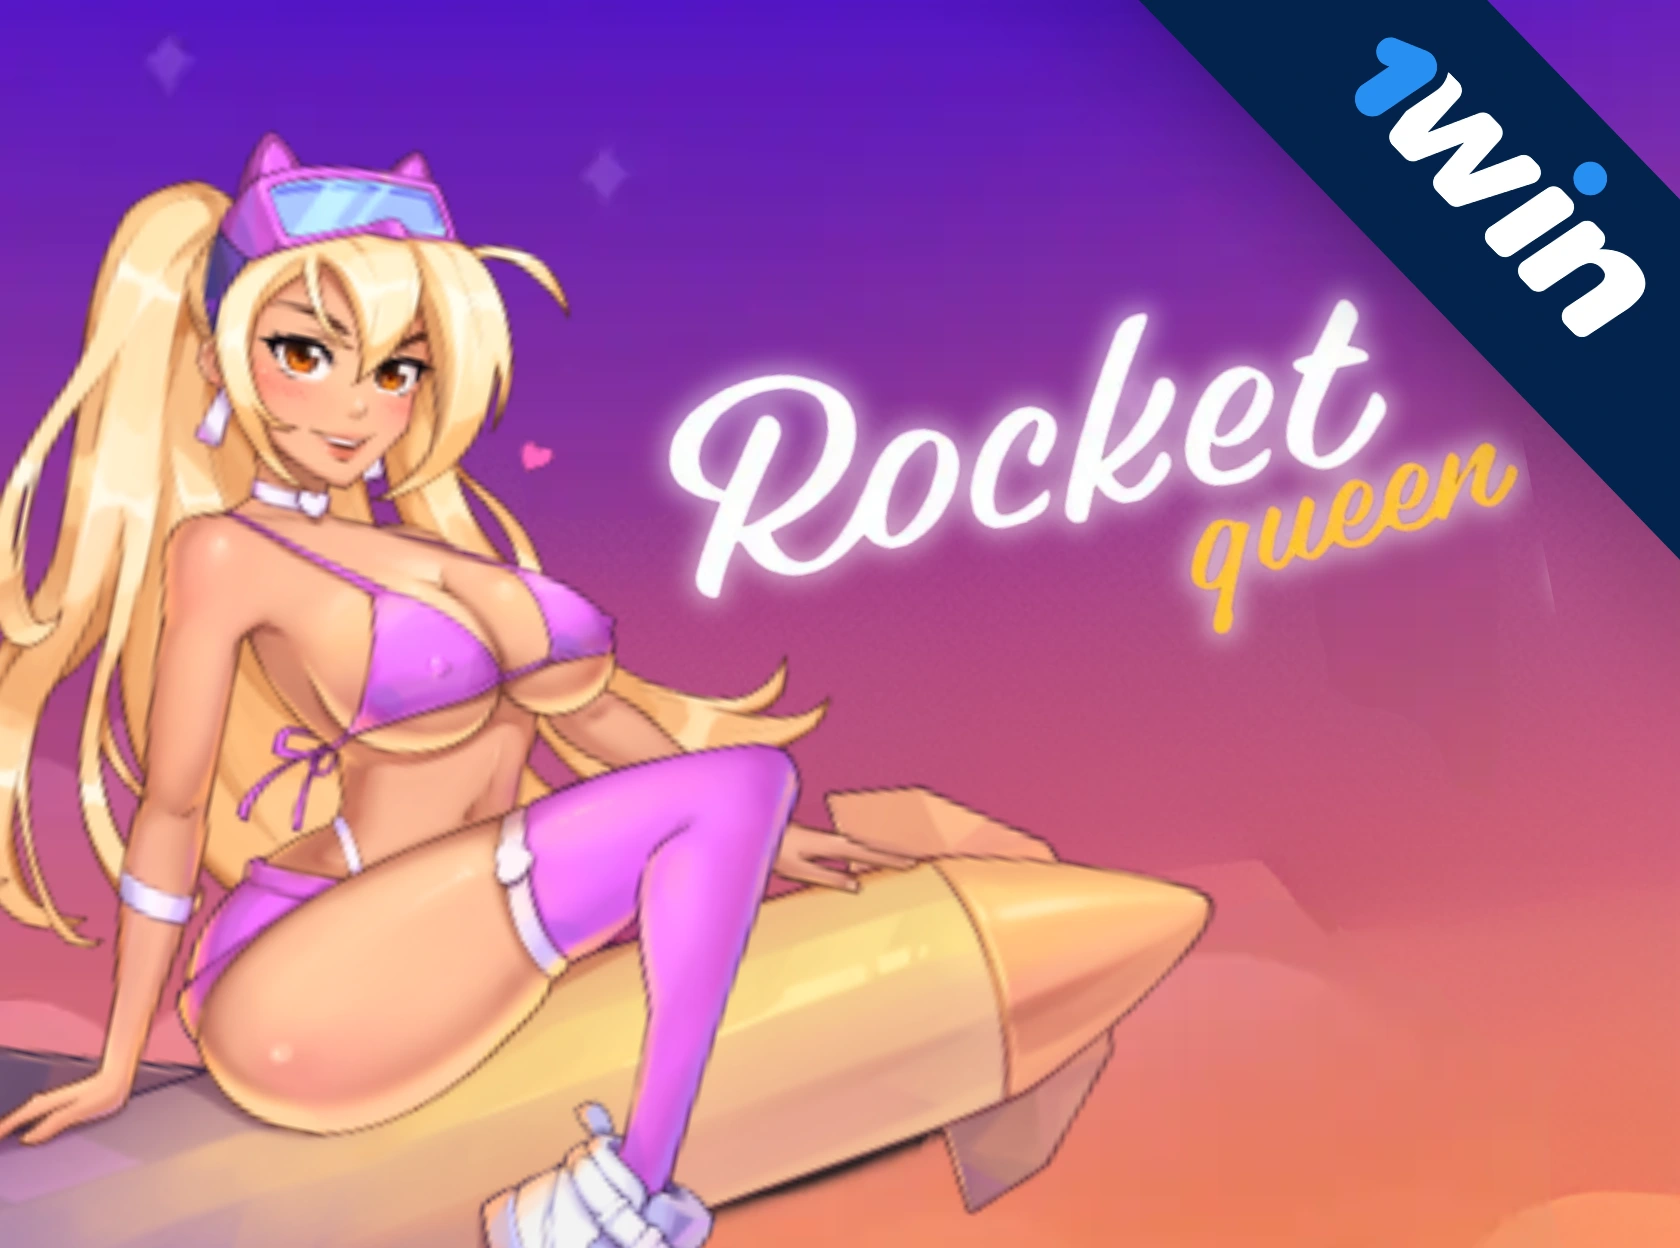 Rocket Queen – вибуховий хіт 1win!